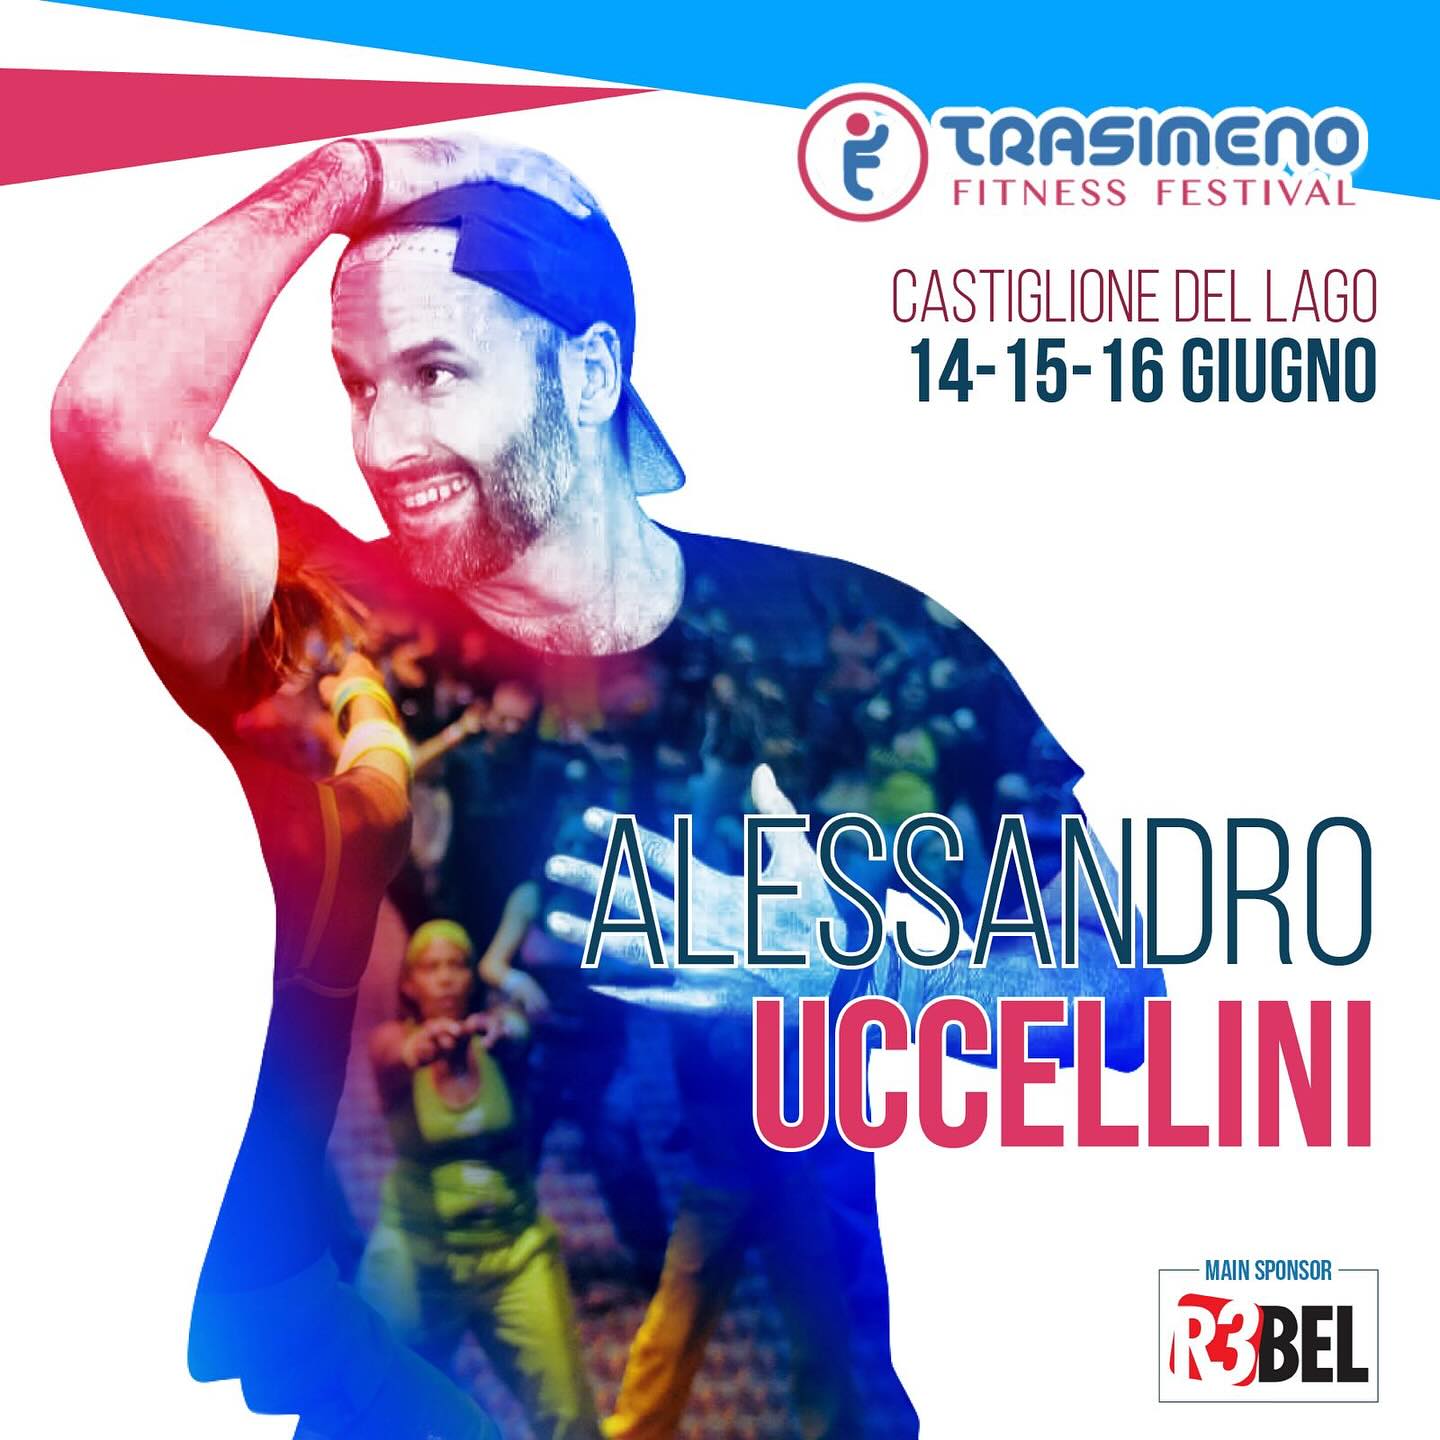 Alessandro Uccellini - Trasimeno Fitness Festival